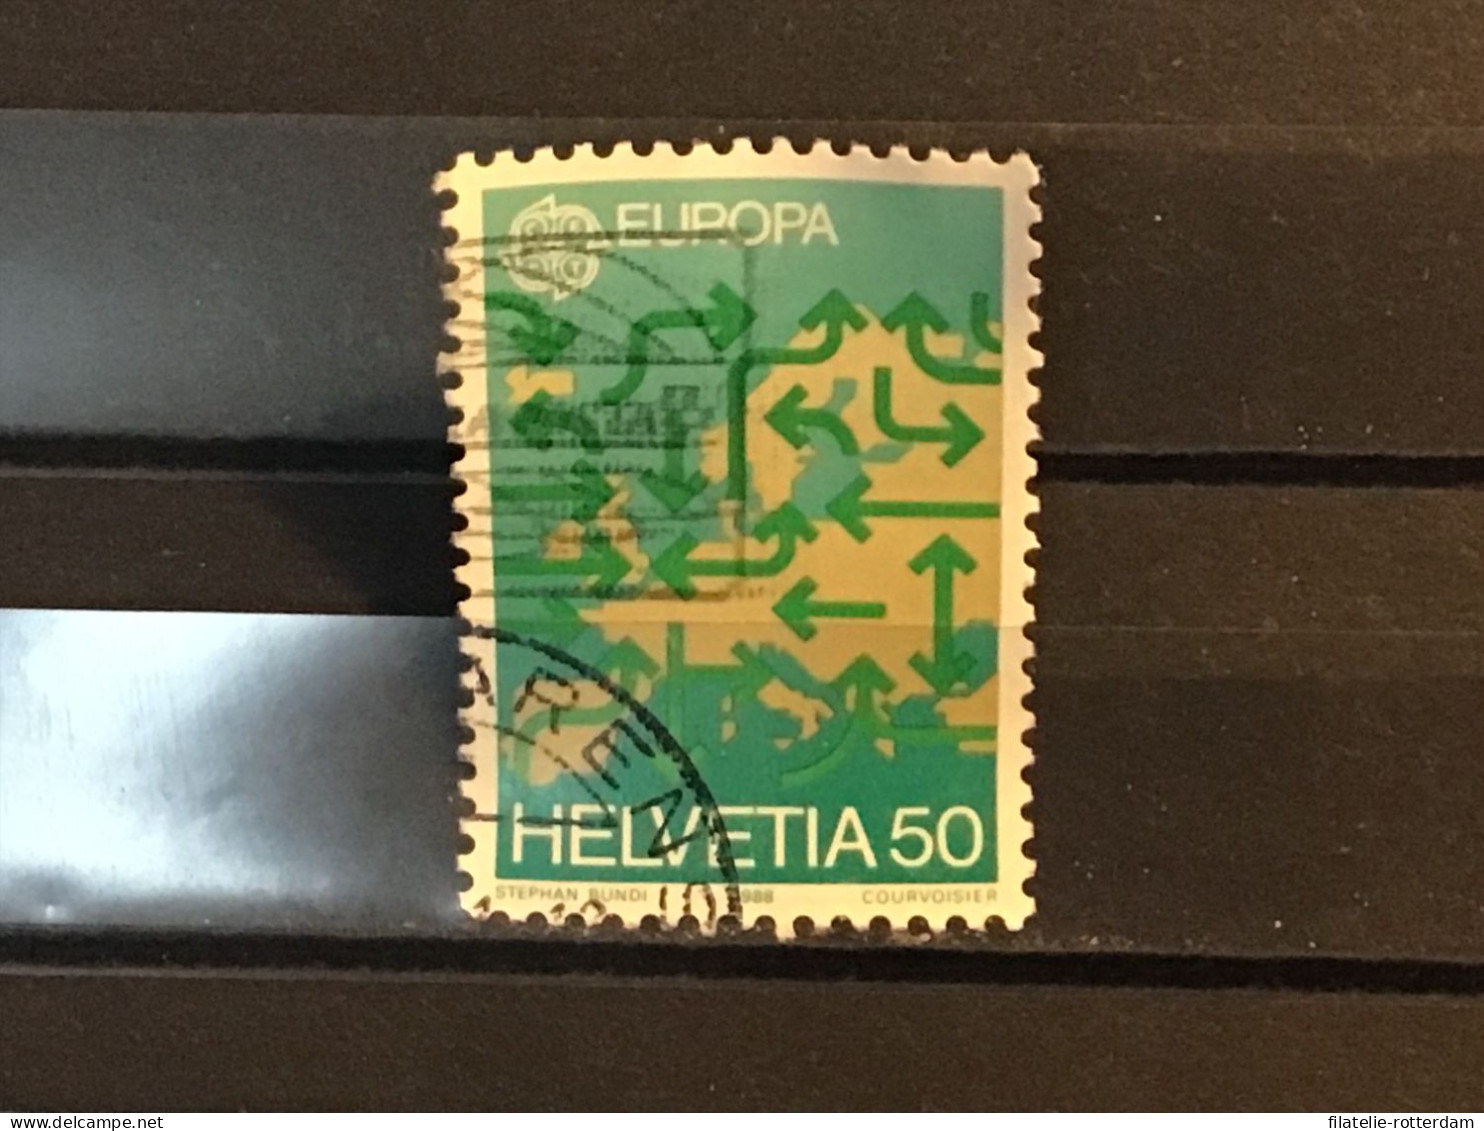 Switzerland / Zwitserland - Europa (50) 1988 - Used Stamps